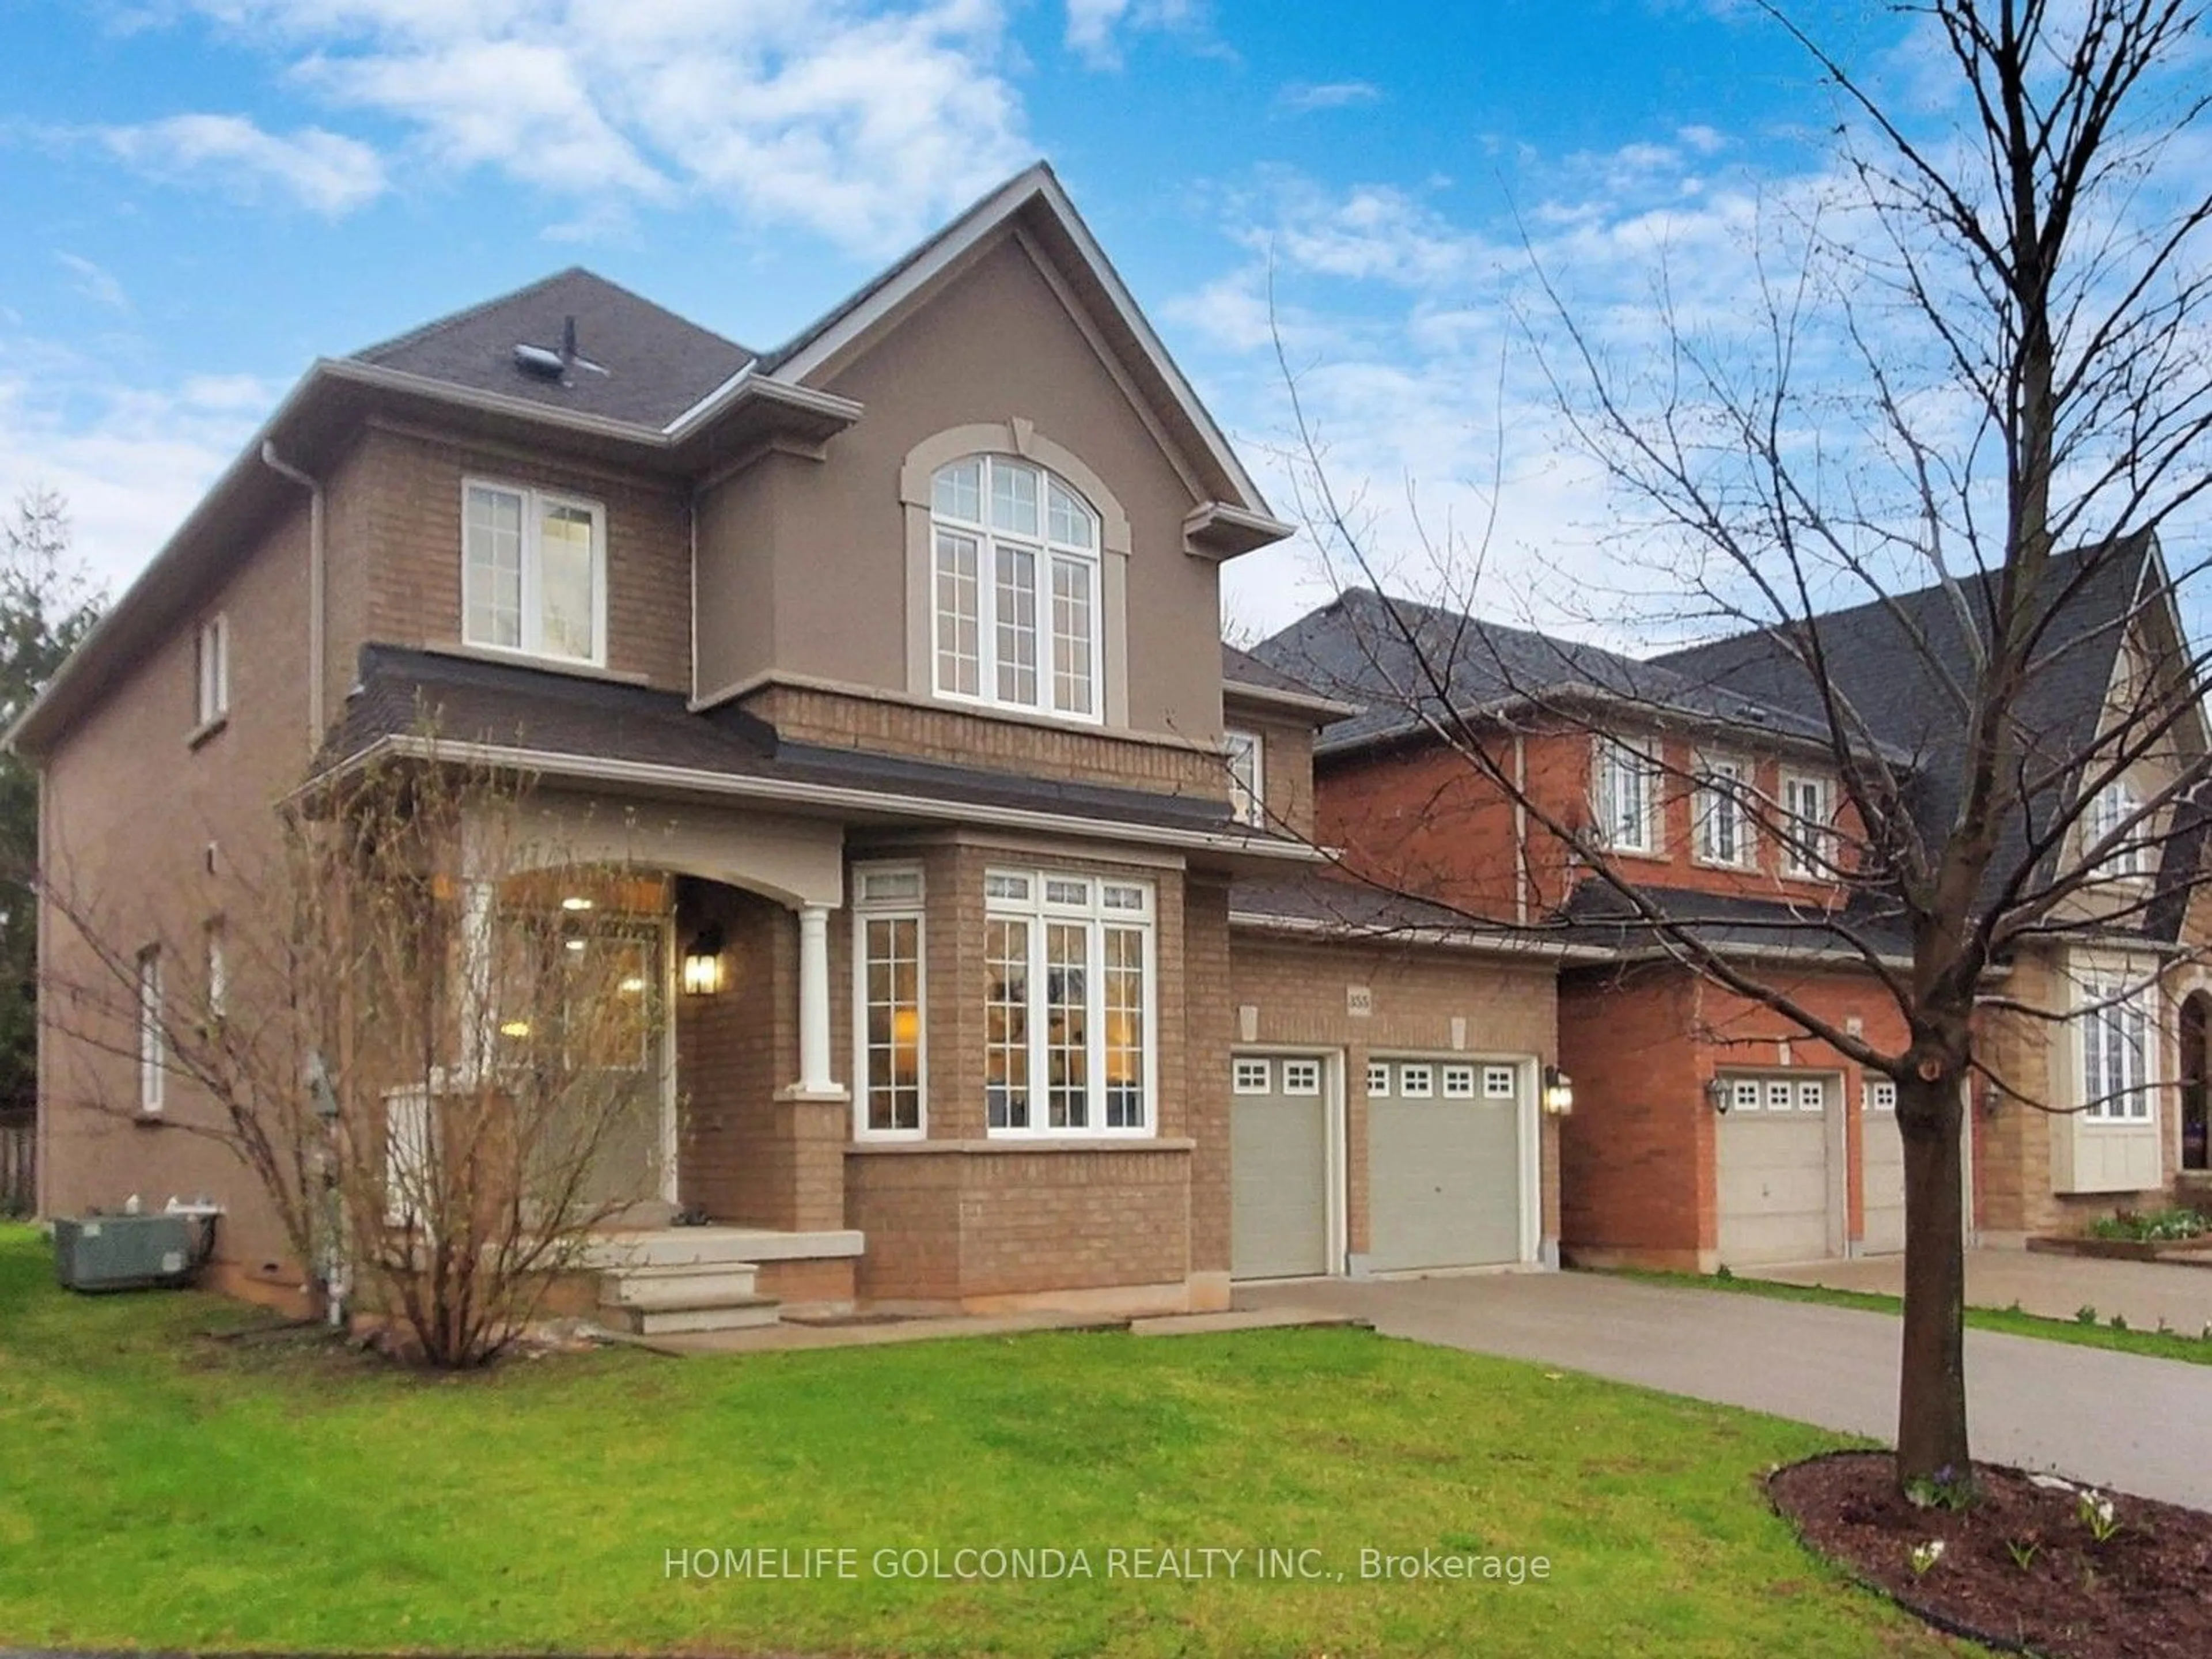 Home with brick exterior material for 355 Burloak Dr, Oakville Ontario L6L 6W8